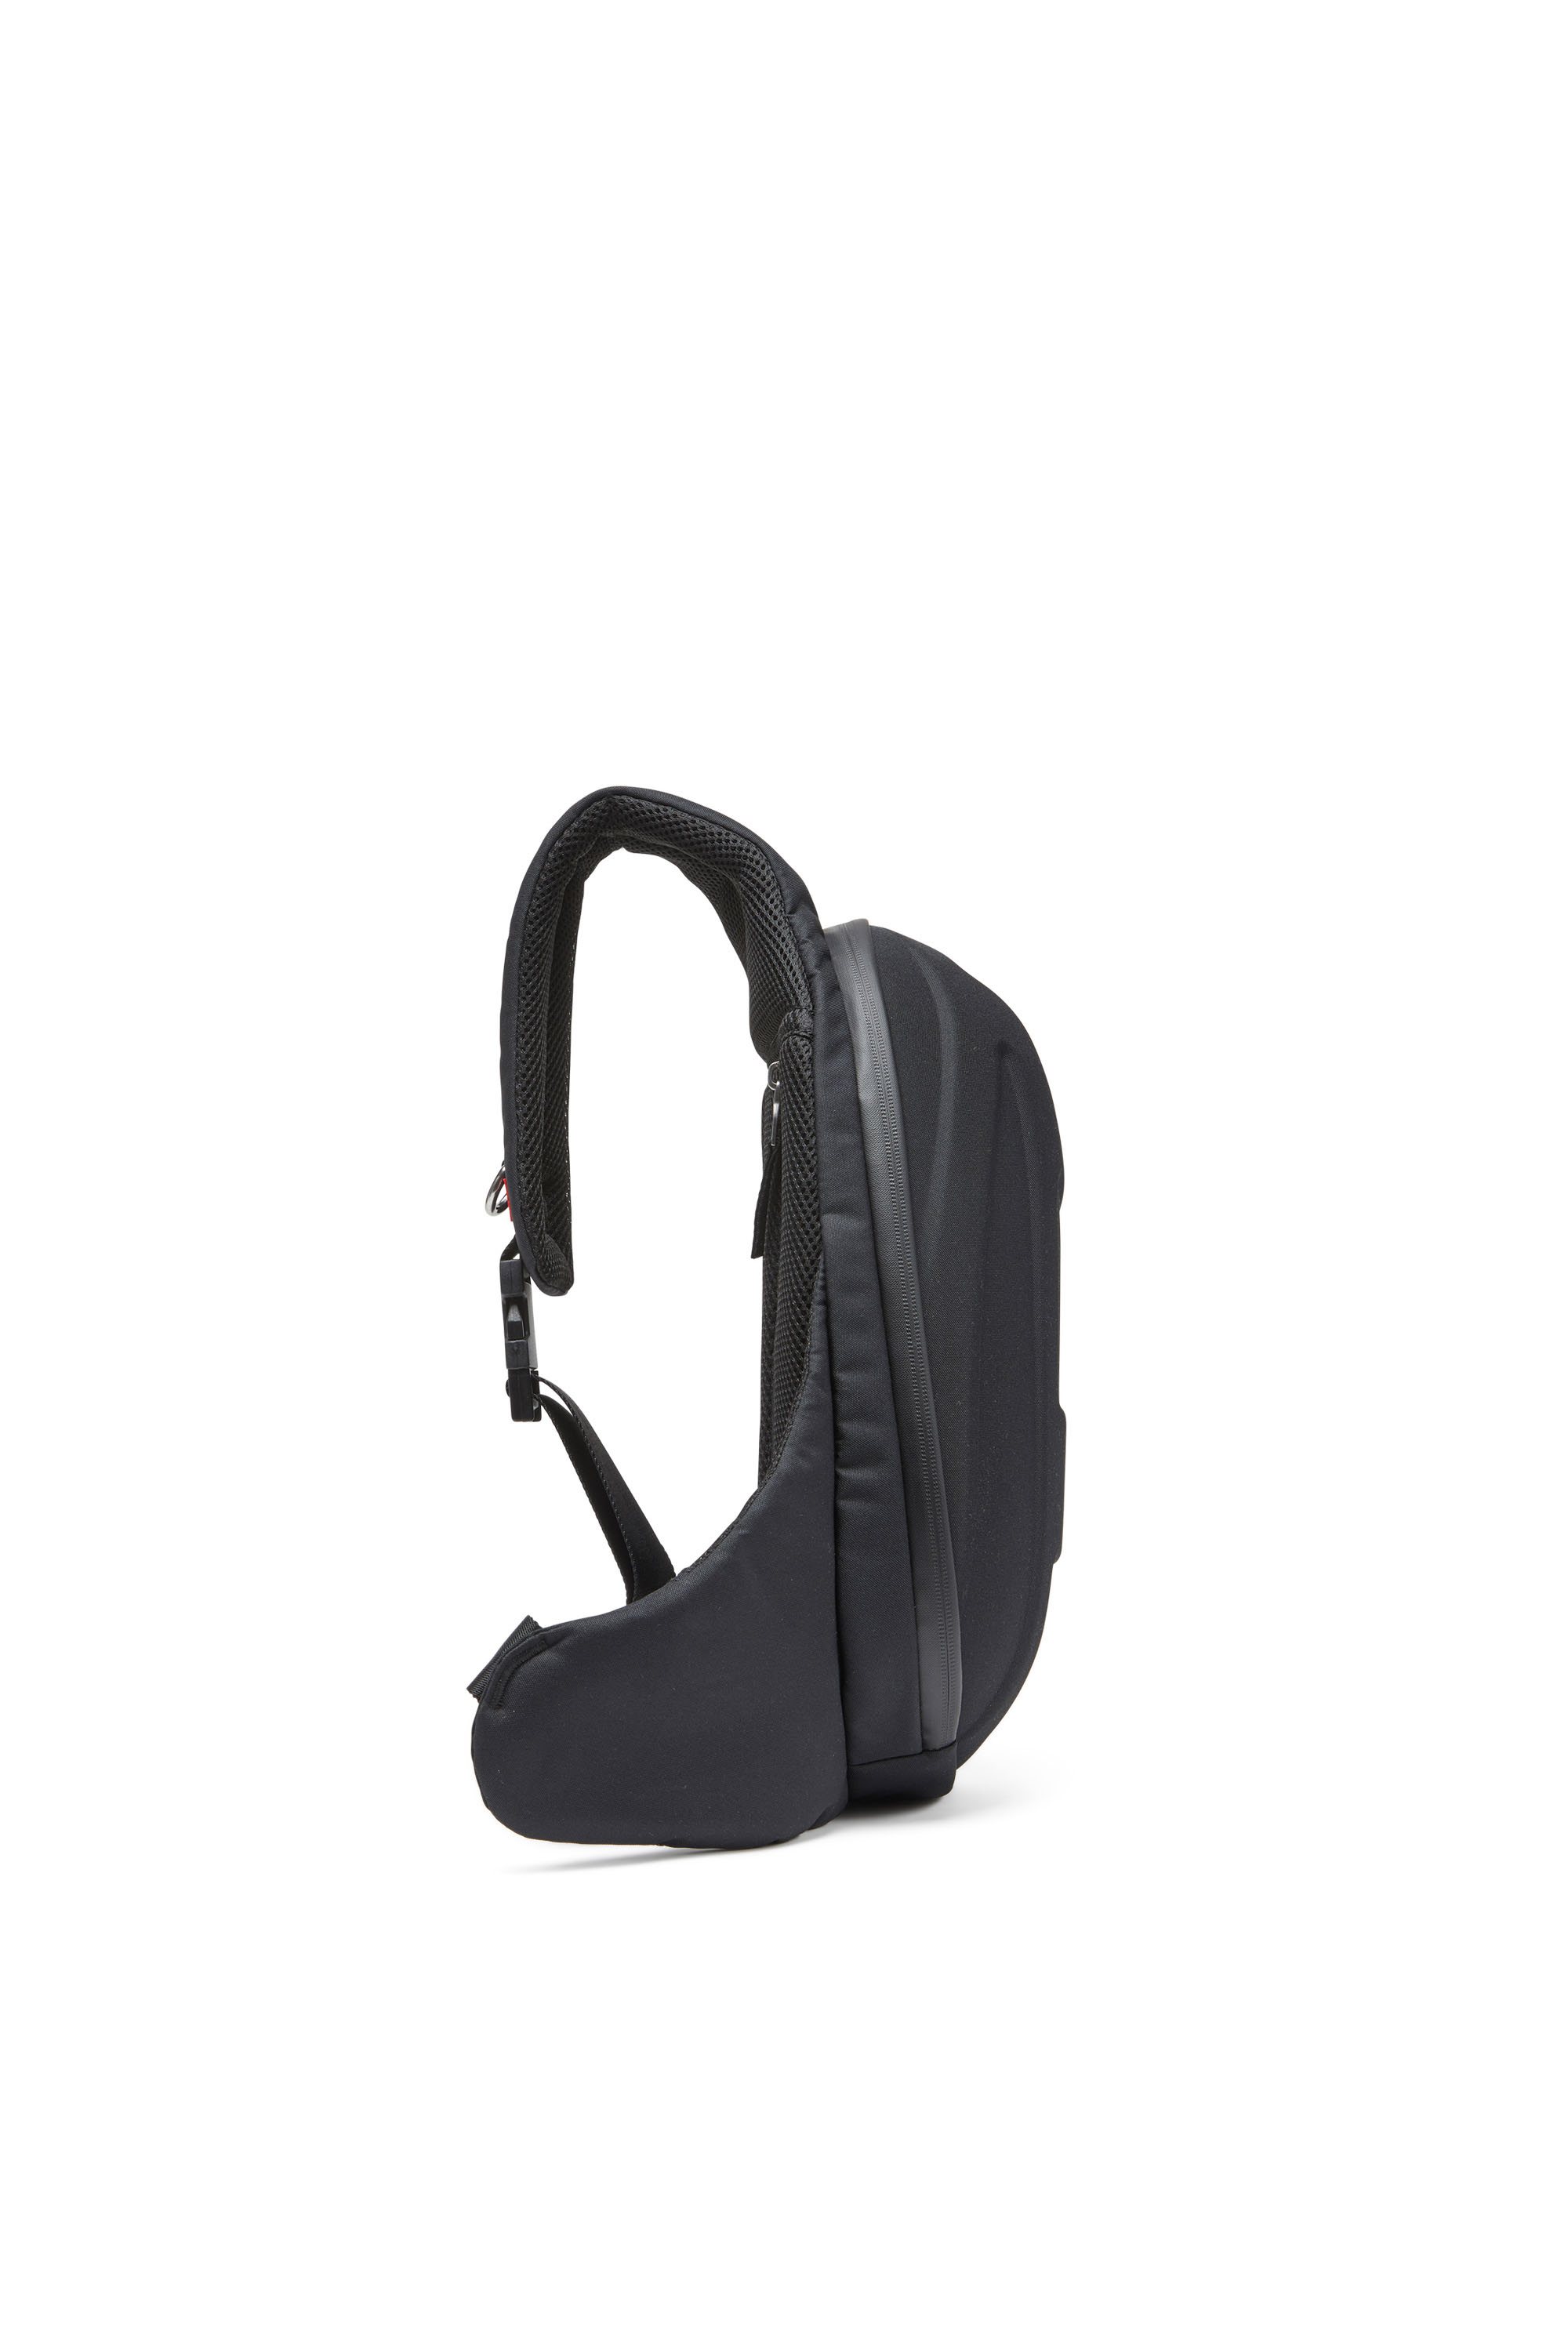 Diesel - 1DR-POD SLING BAG, Male 1DR-Pod-Hard shell sling bag in ブラック - Image 4